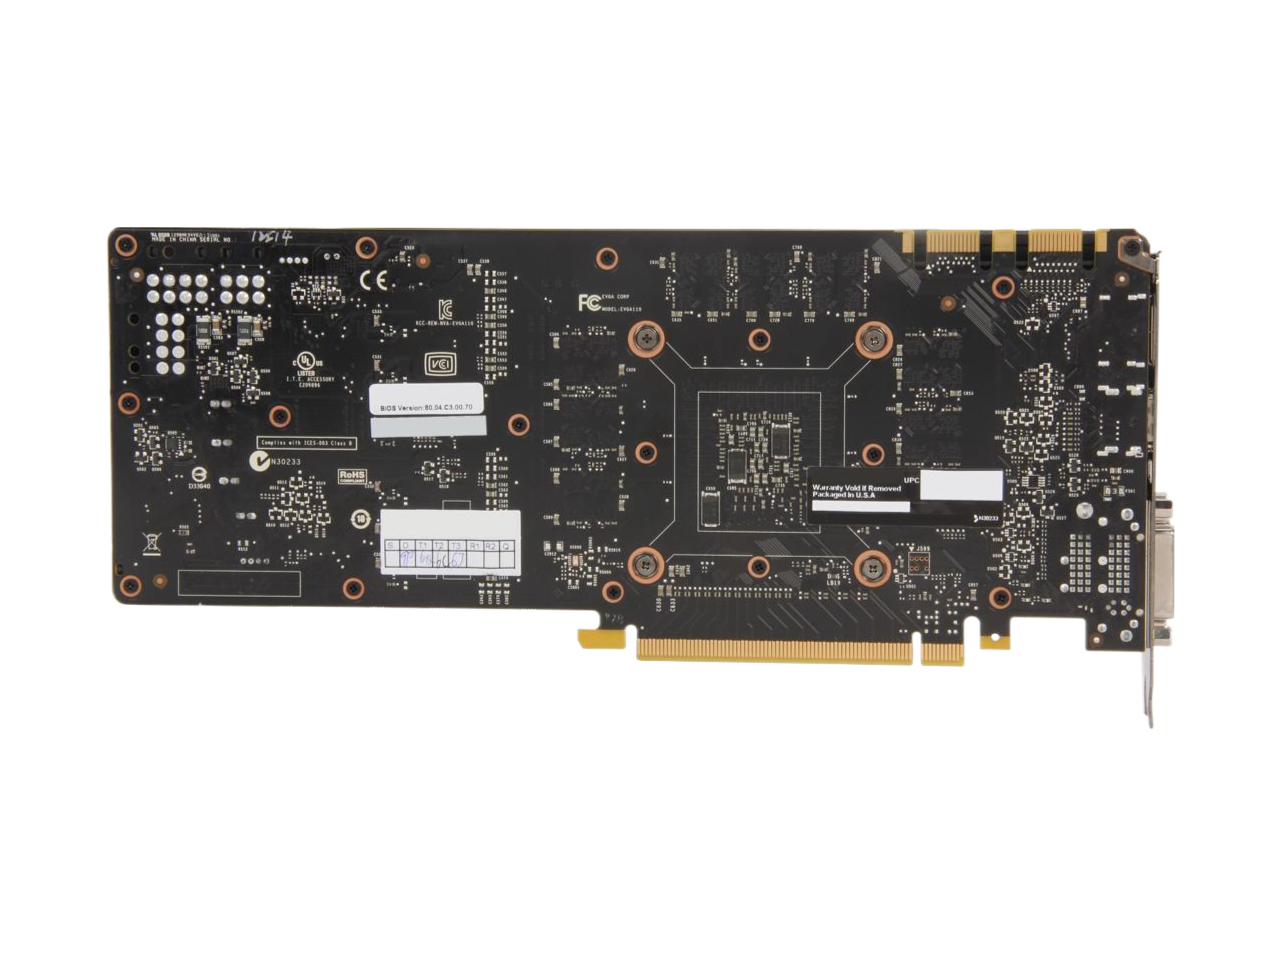 EVGA GeForce GTX 770 2GB 256-Bit GDDR5 G-SYNC Support  PCI Express 3.0 SLI Support Video Card 02G-P4-2770-KR